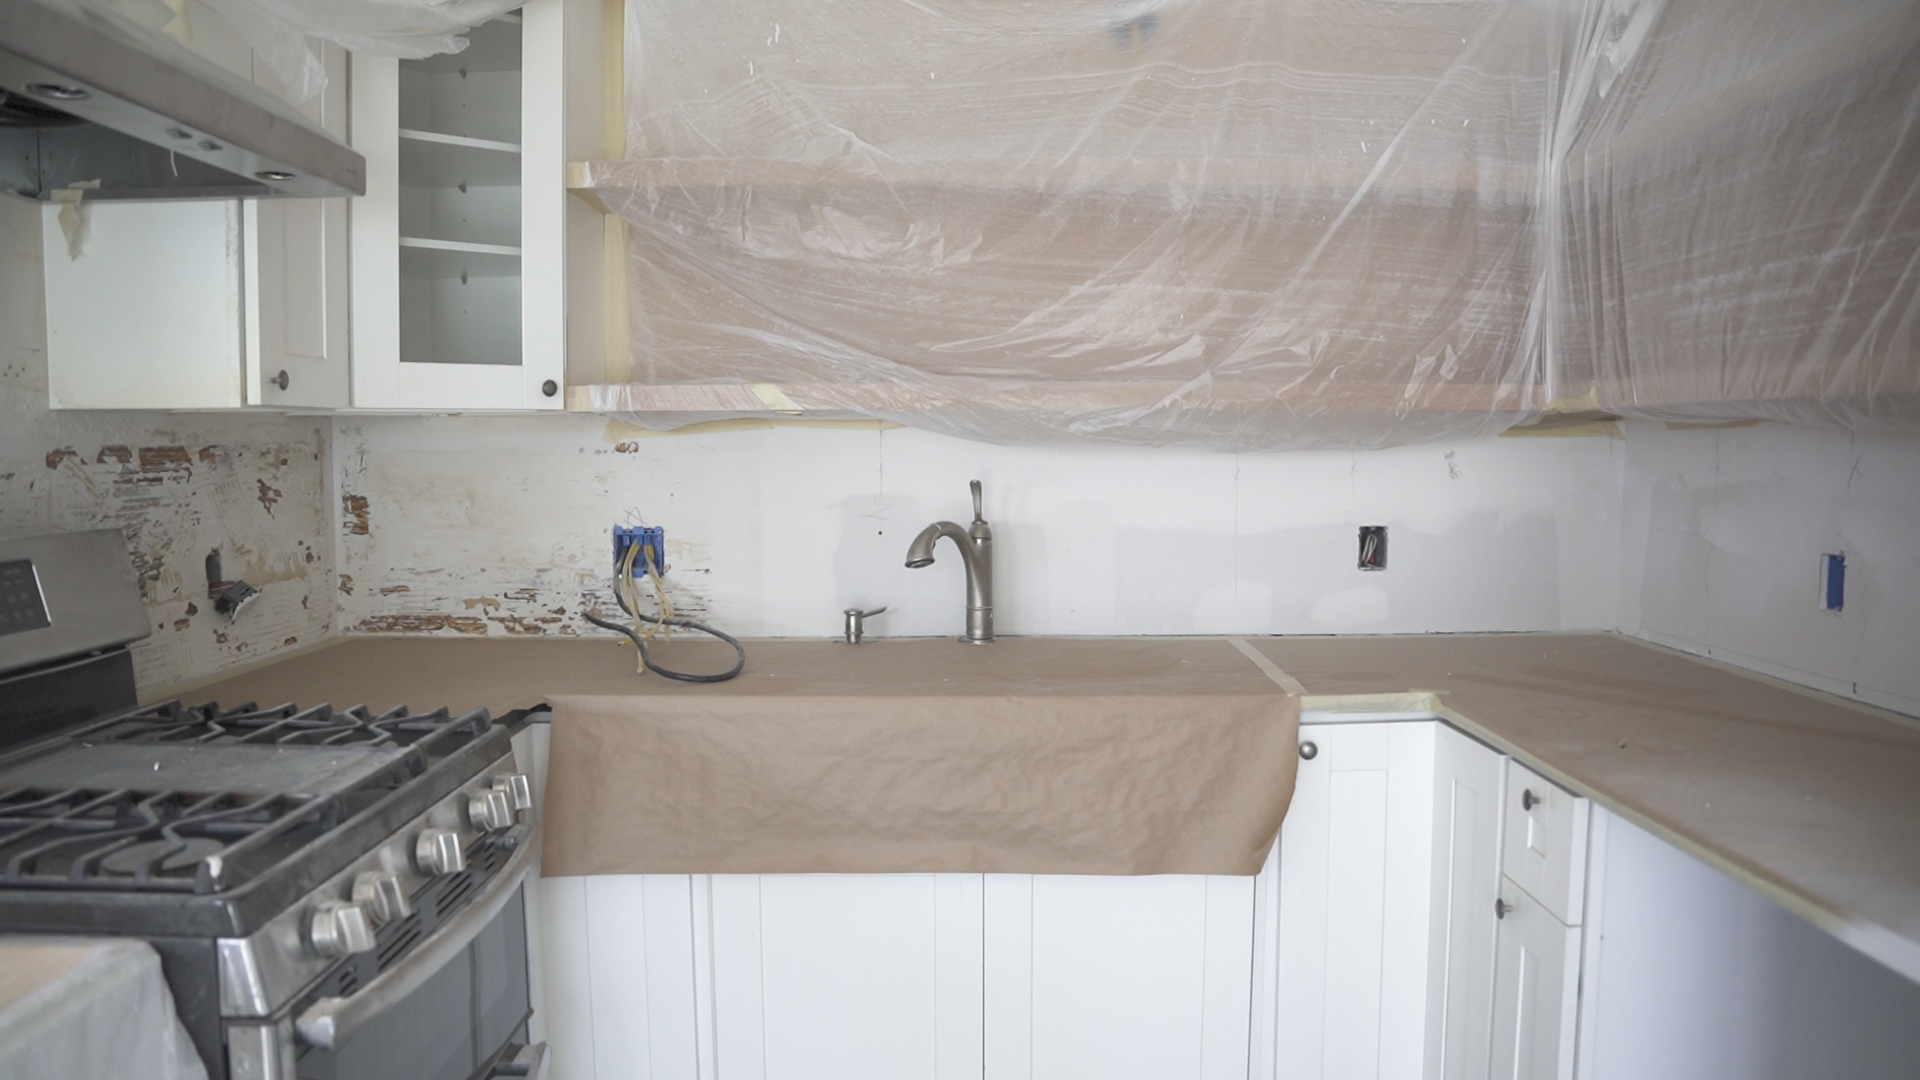 Kitchen backsplash before installation